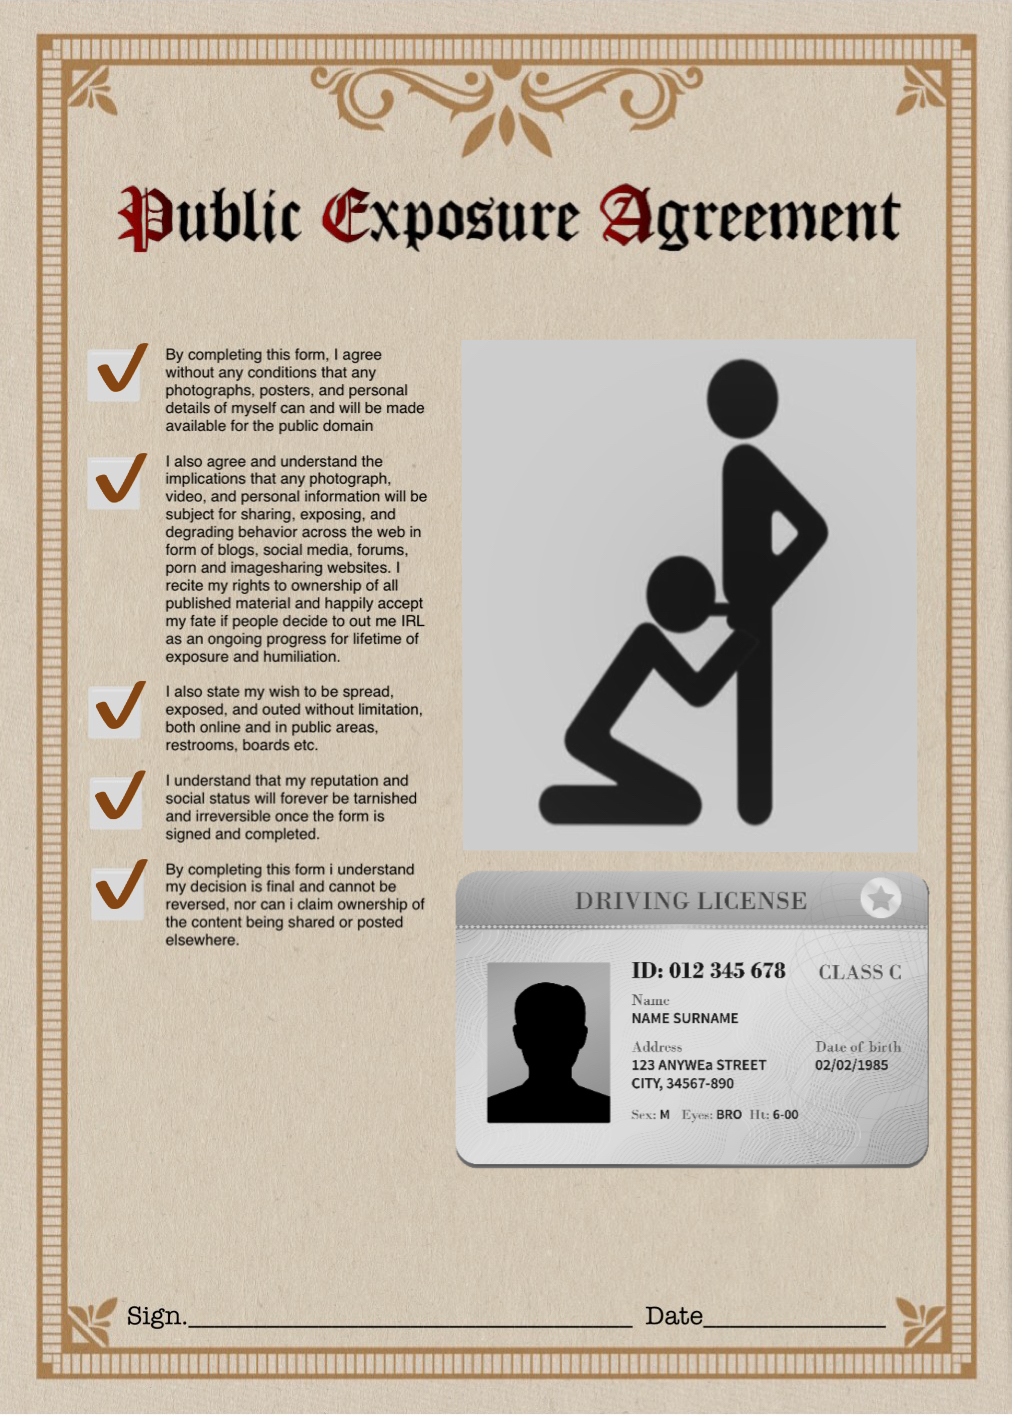 Public Exposure Agreement form Toplosers photo